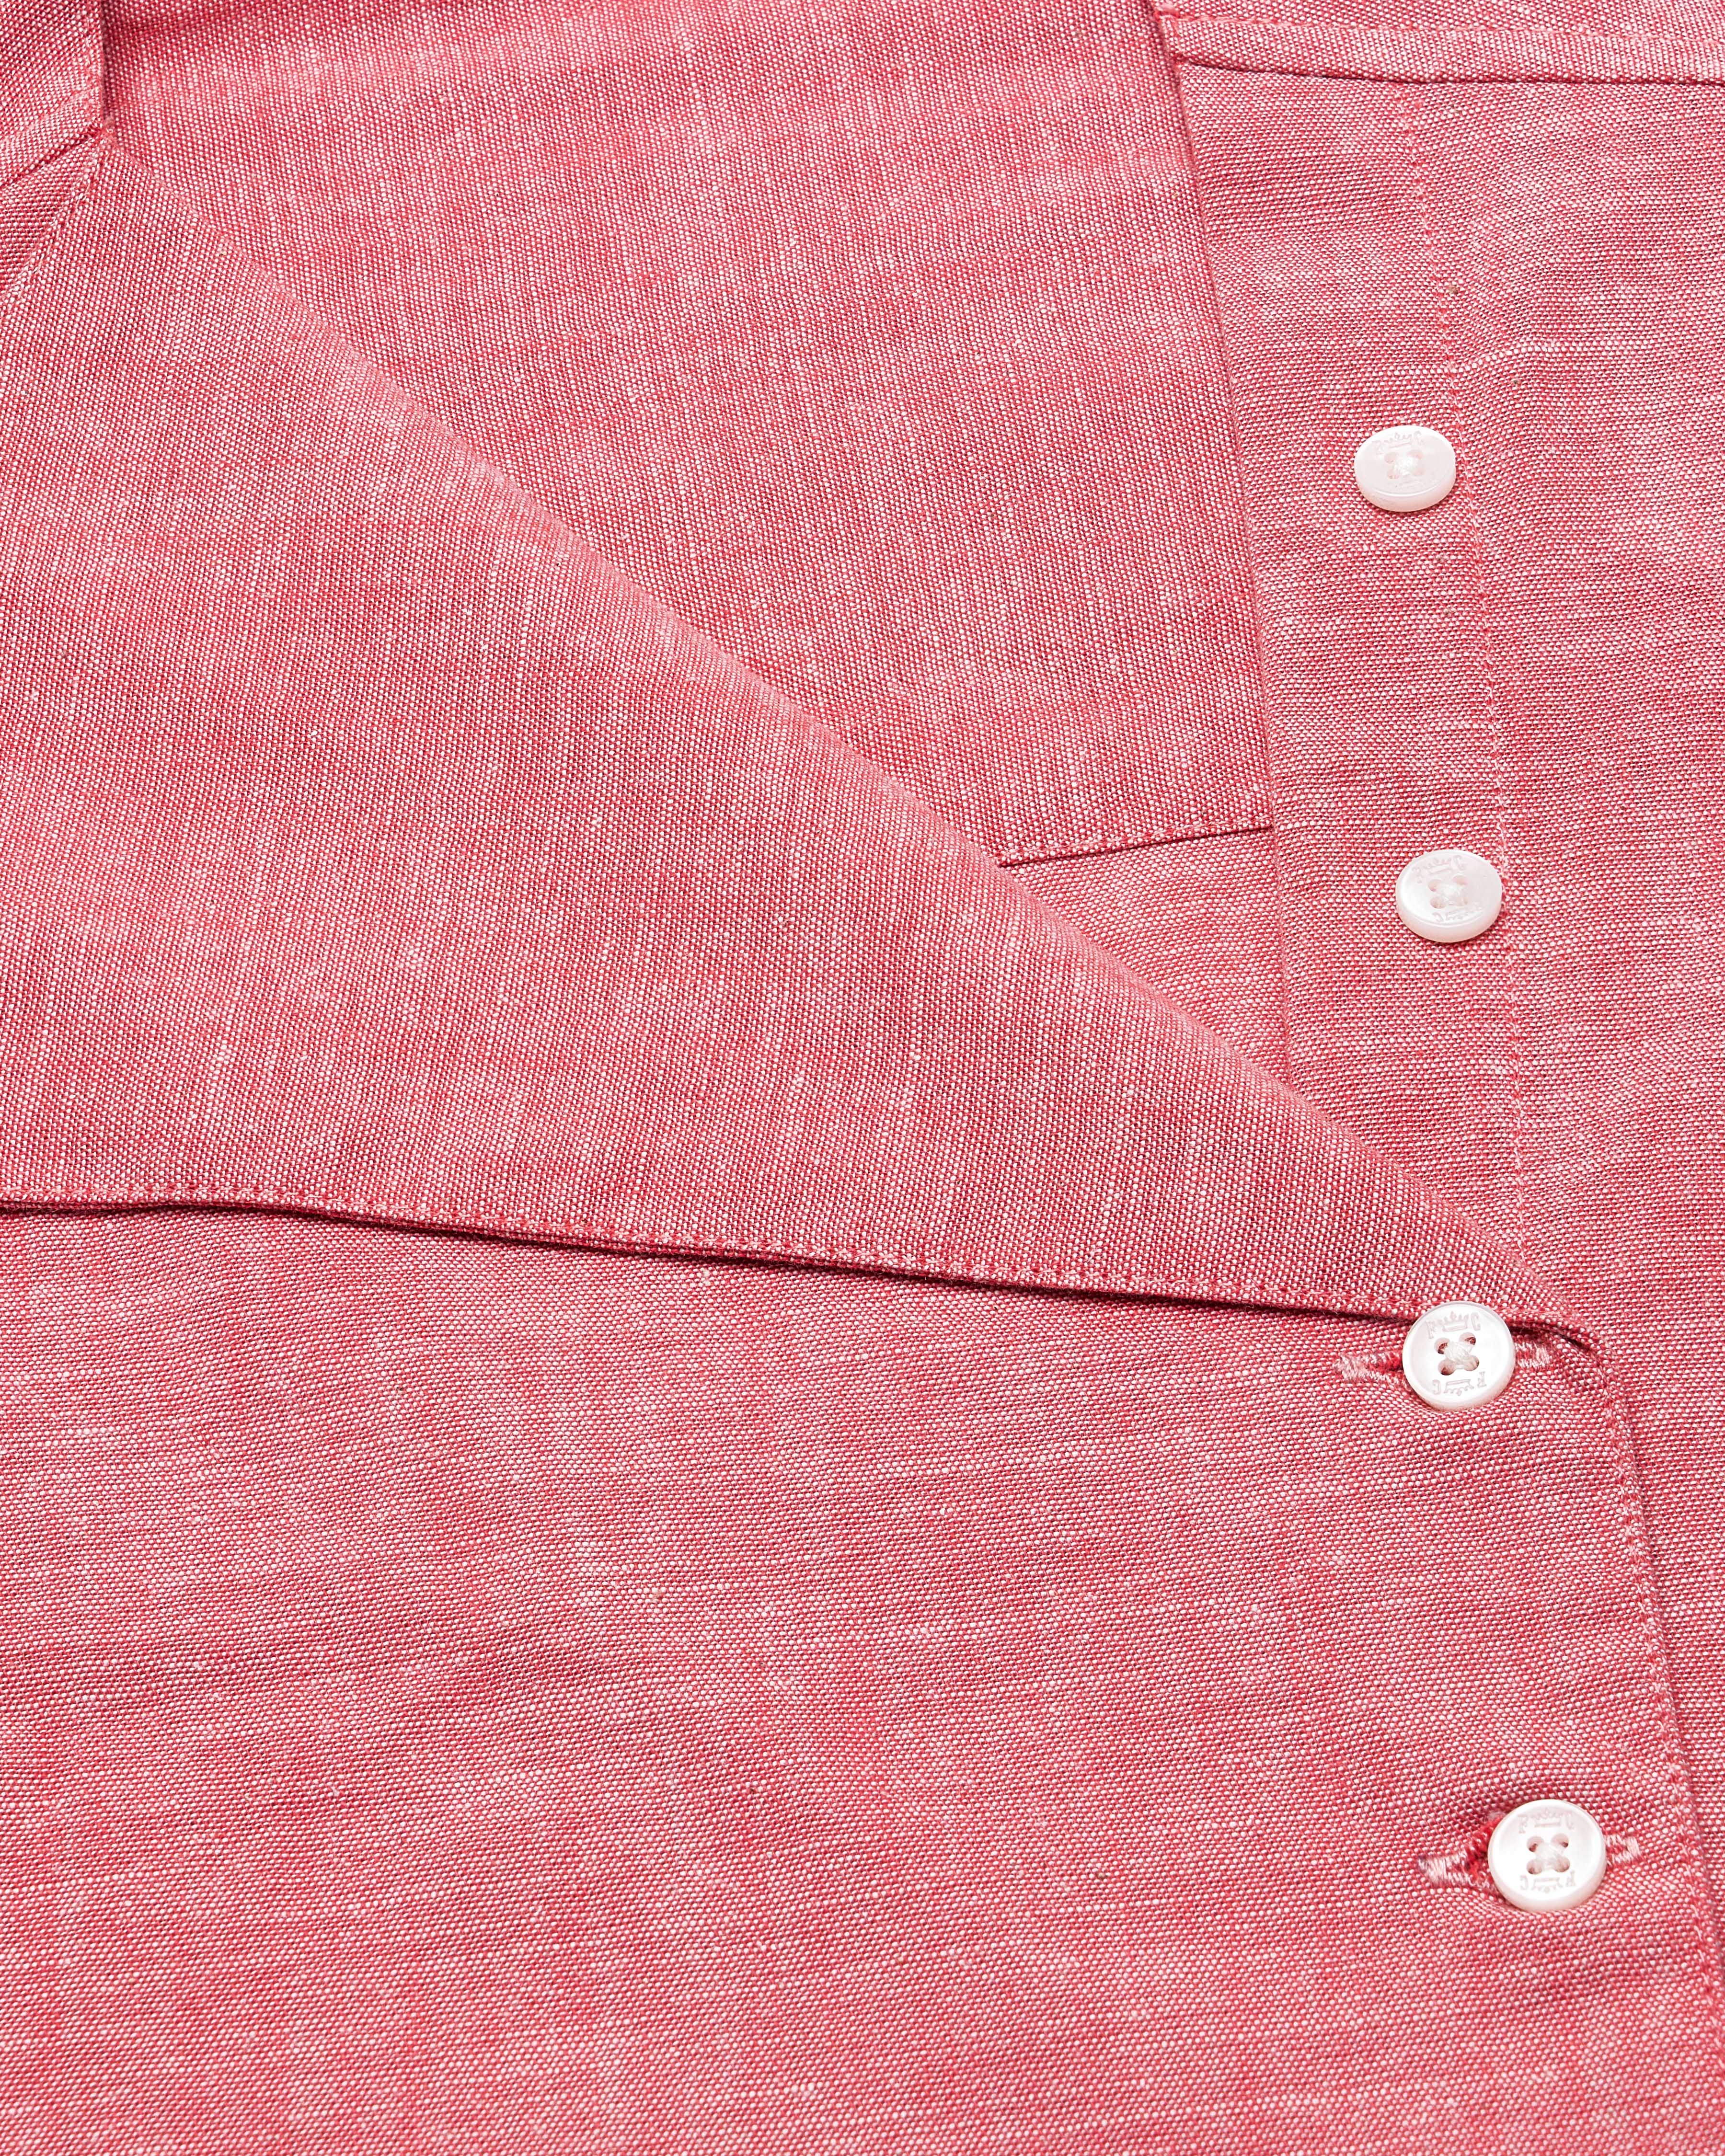 Faded Pink Premium Cotton Shirt